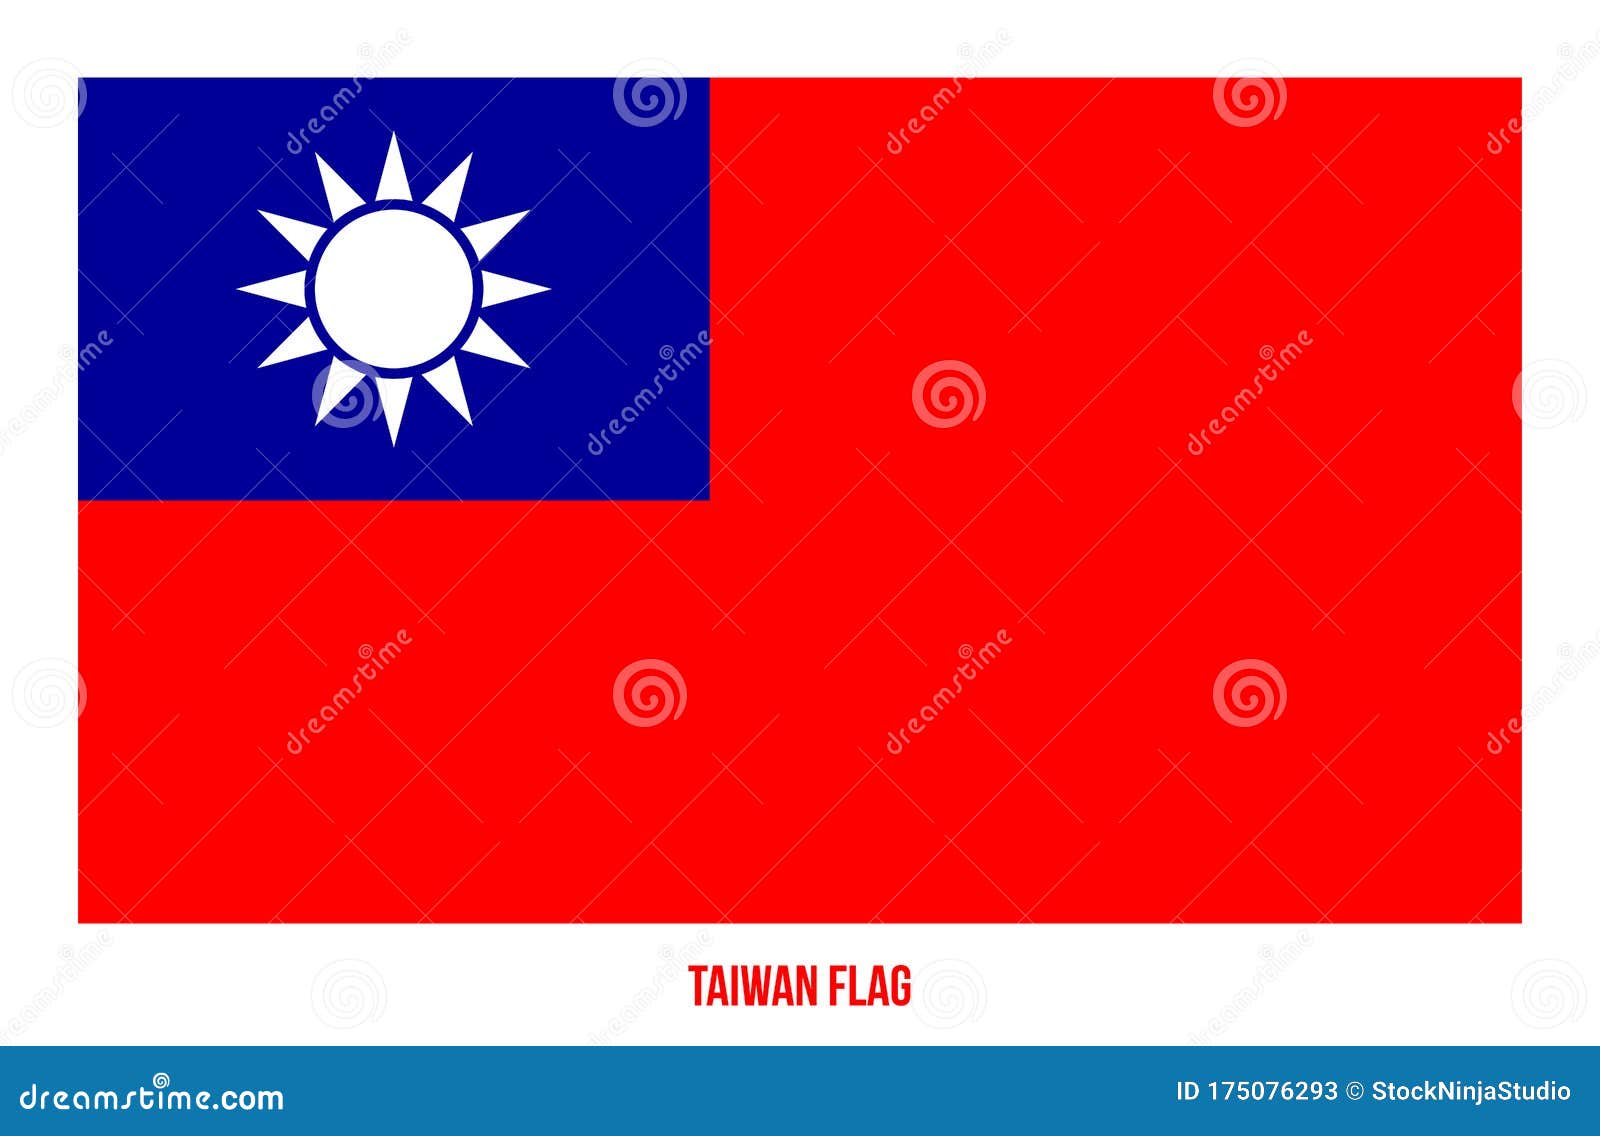 Taiwan Flag Vector Illustration On White Background Taiwan National Flag Stock Vector Illustration Of Background Flagpole 175076293